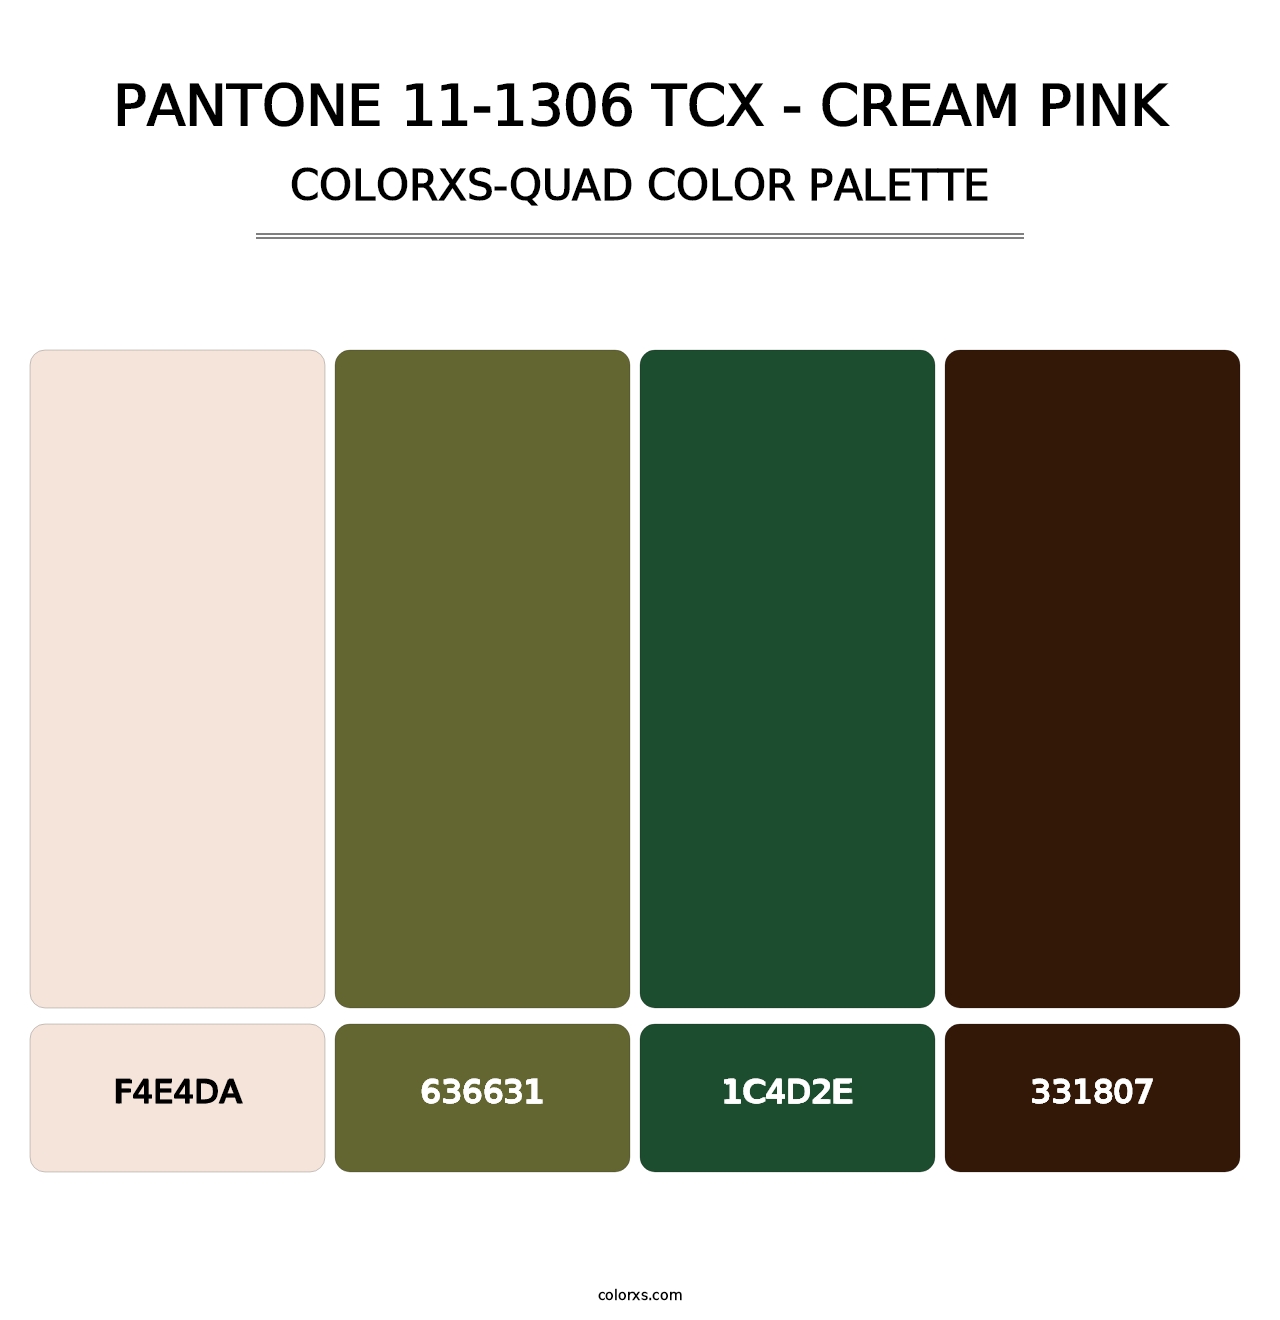 PANTONE 11-1306 TCX - Cream Pink - Colorxs Quad Palette